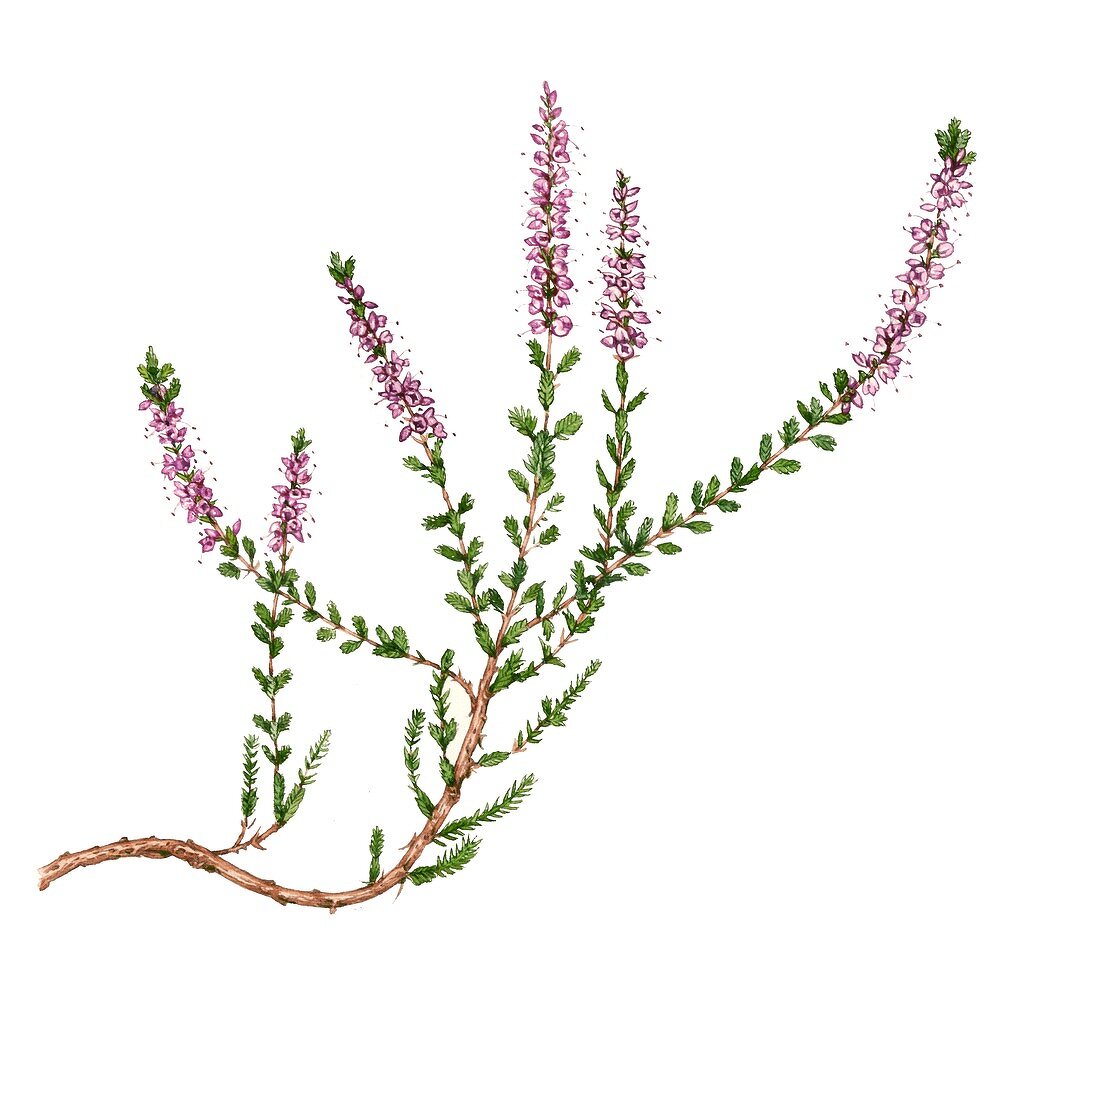 Heather (Calluna vulgaris),illustration